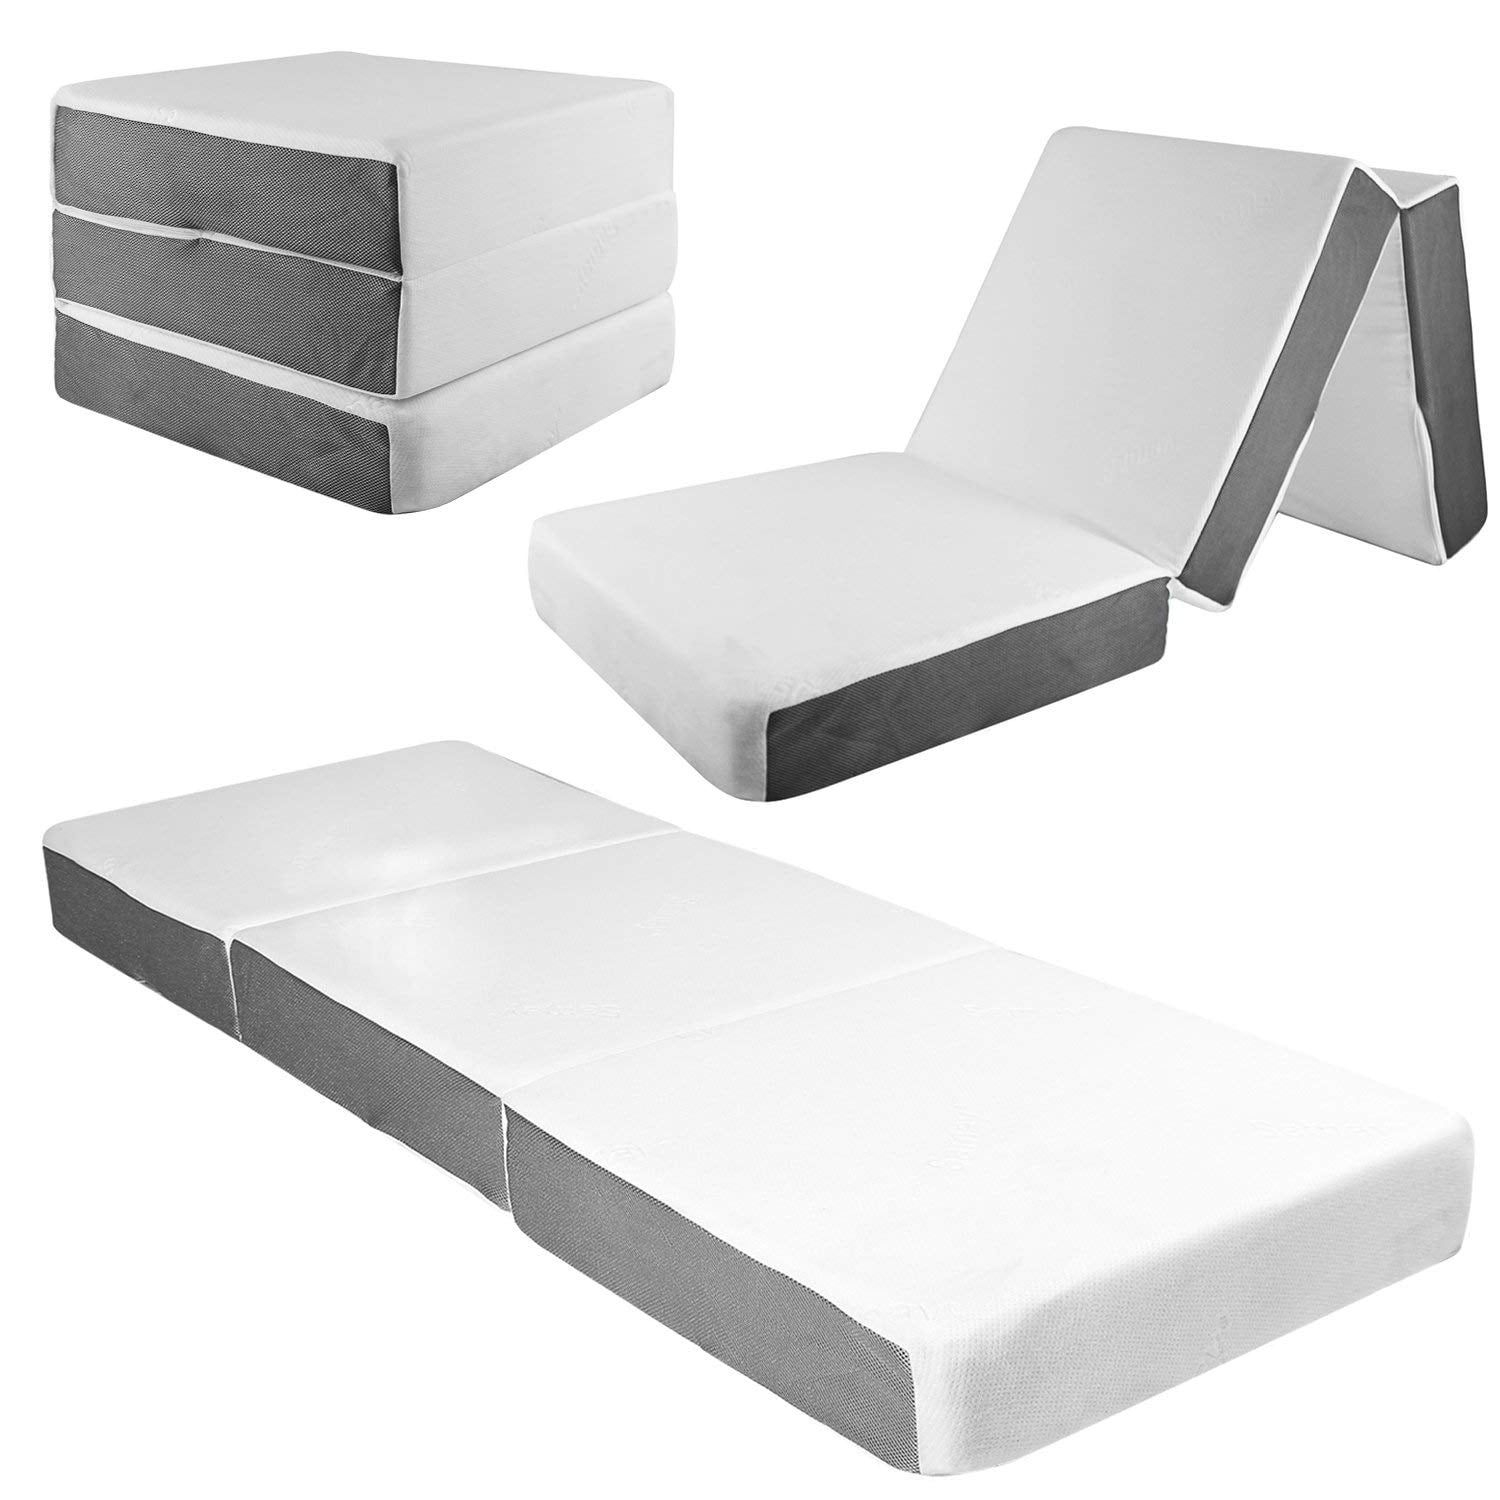 Tri Fold Mattress Memory Foam Folding 3 Inch Ultra Soft Guests Portable Support 